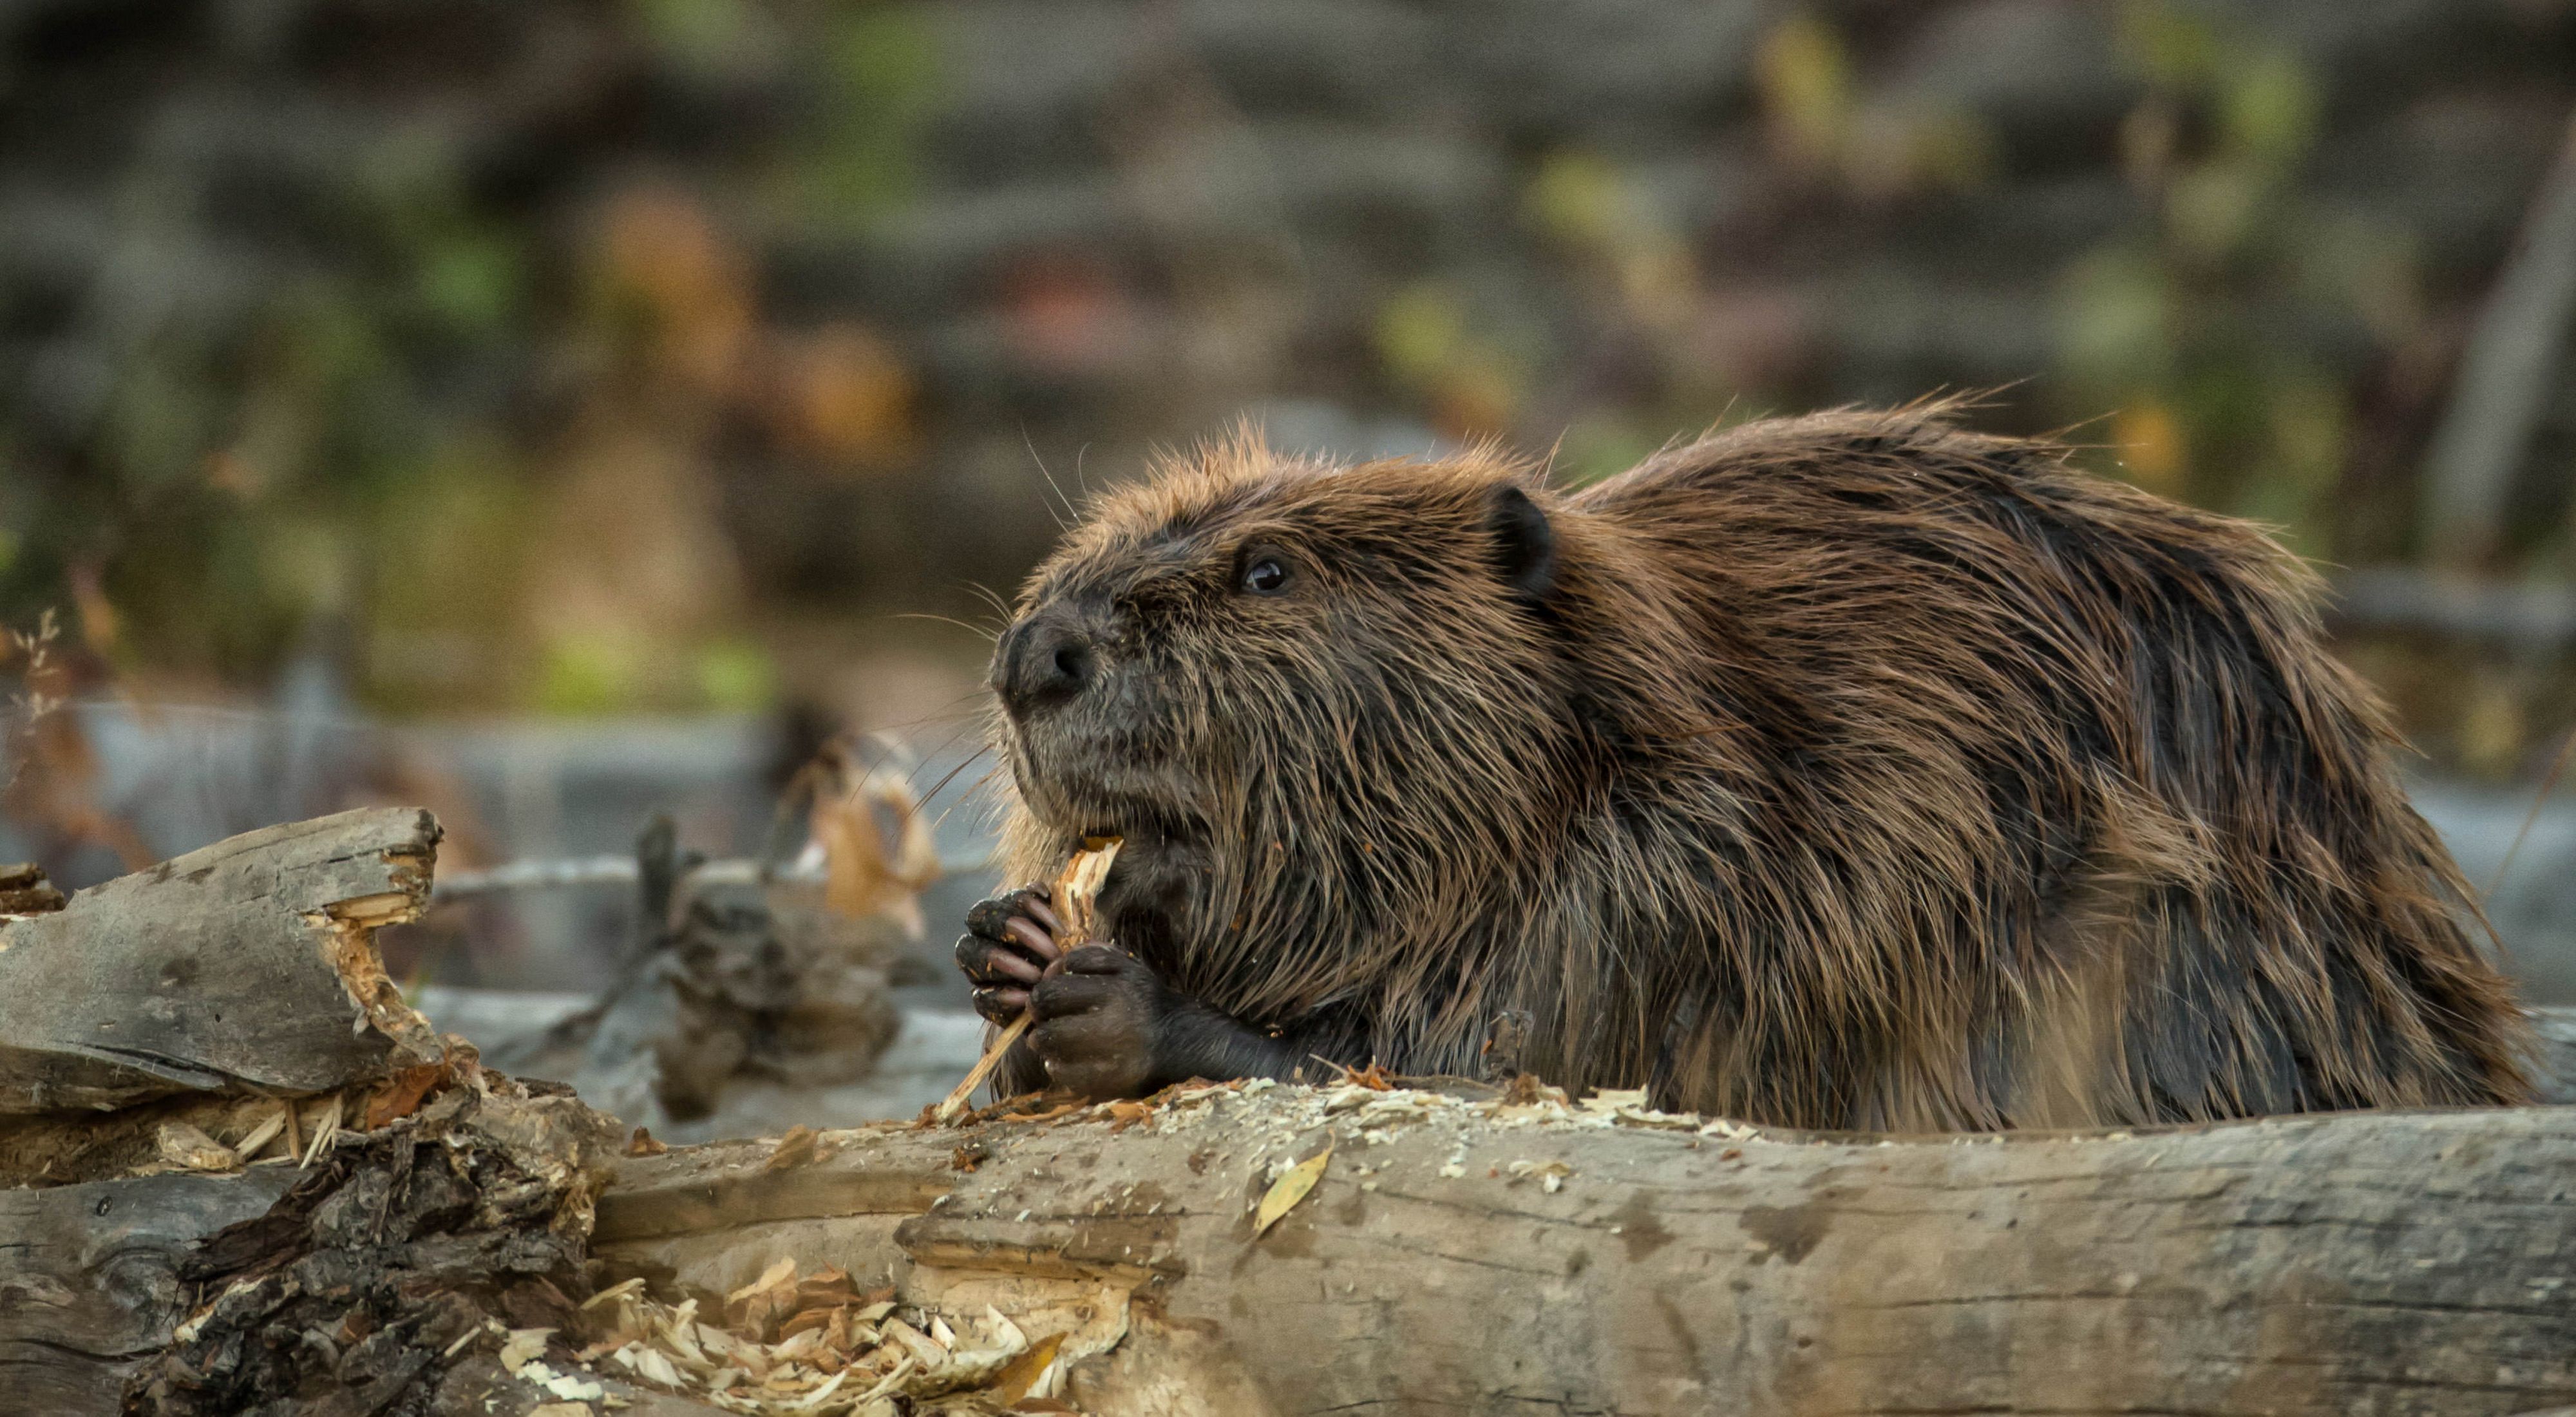 A beaver chews on a piece of tree bark.